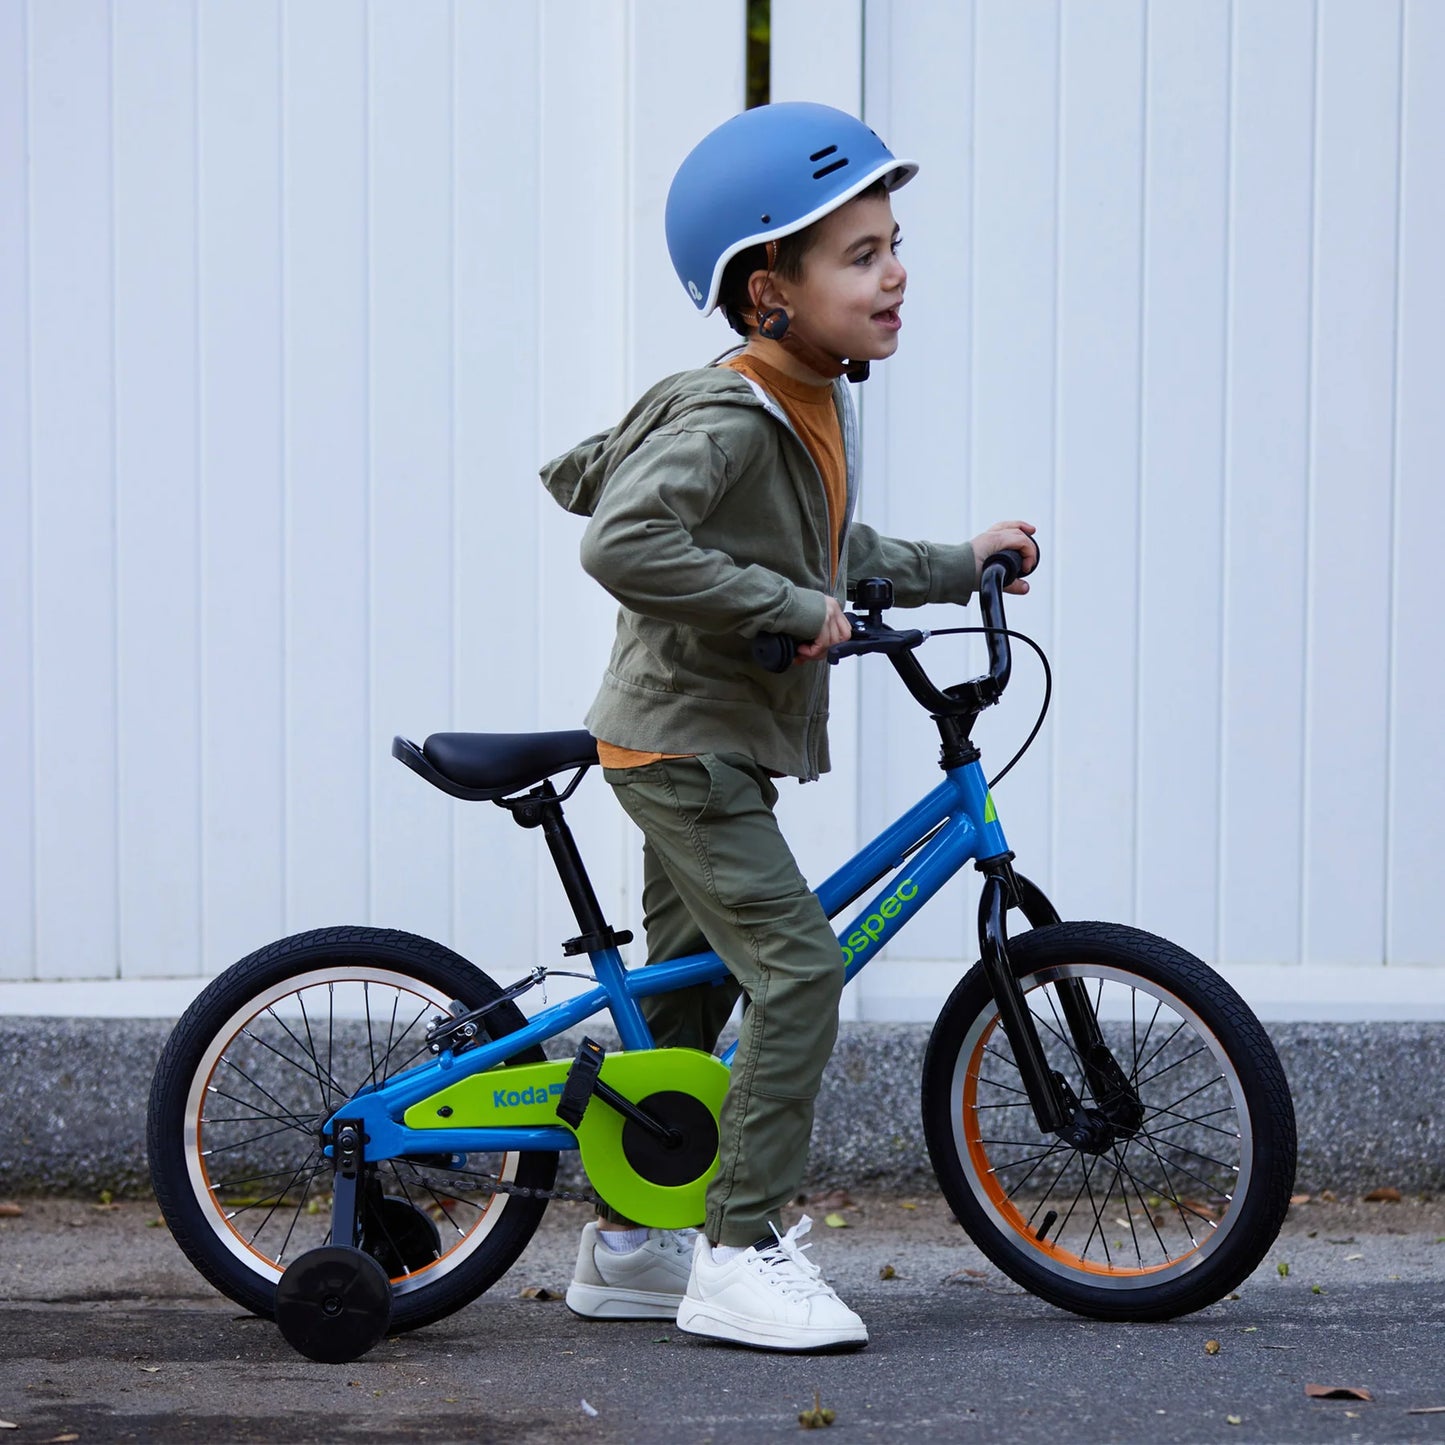 Koda Plus 16" Kids' Bike (4-6 yrs) New